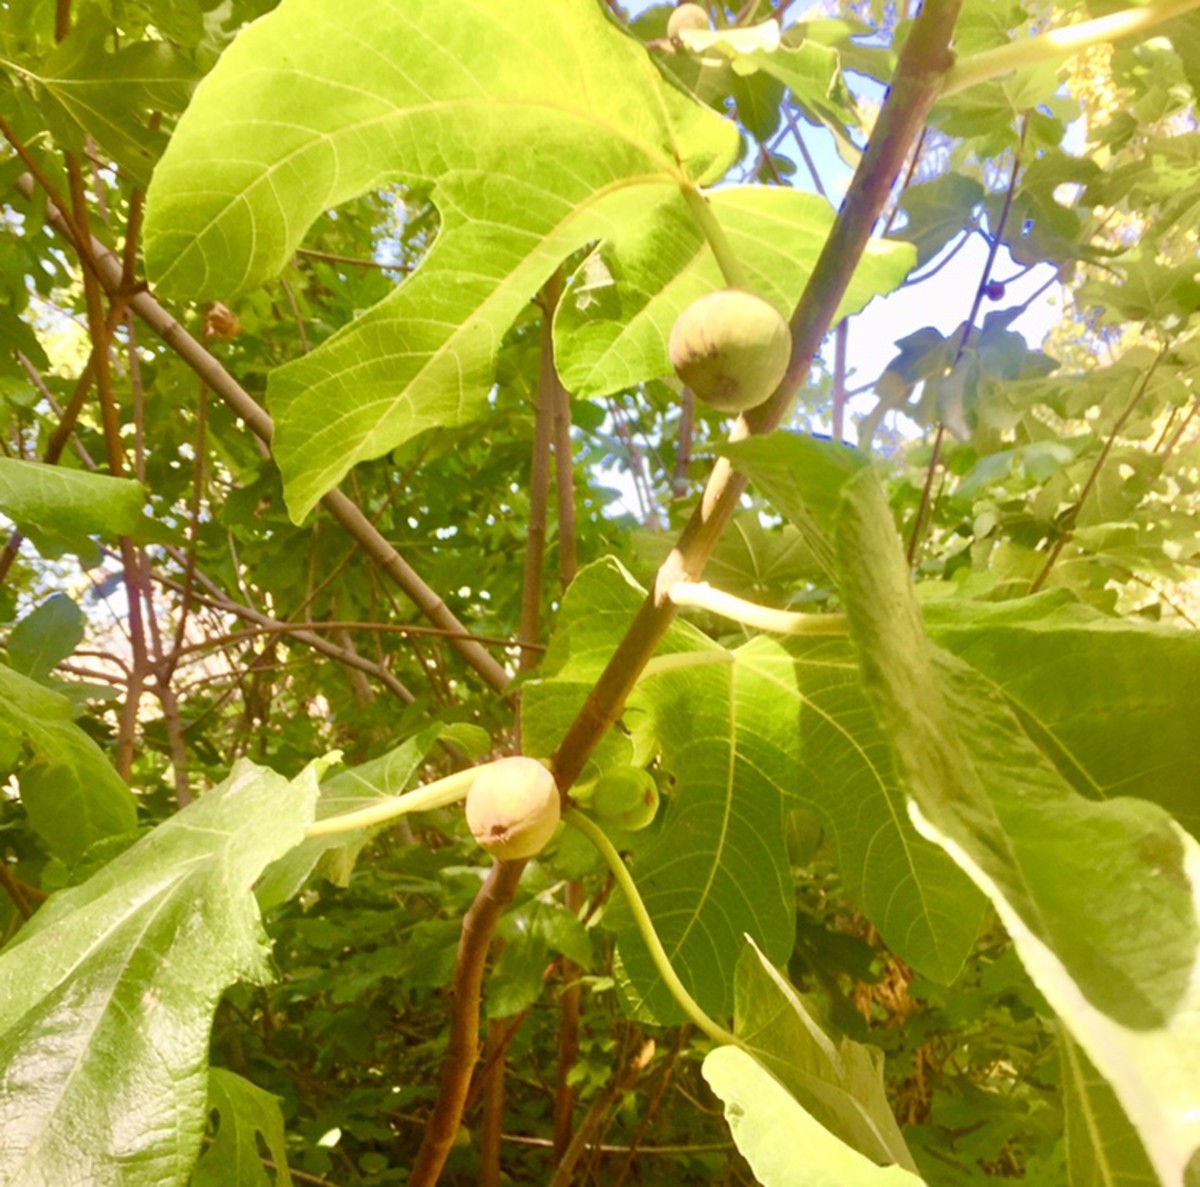 Figs.